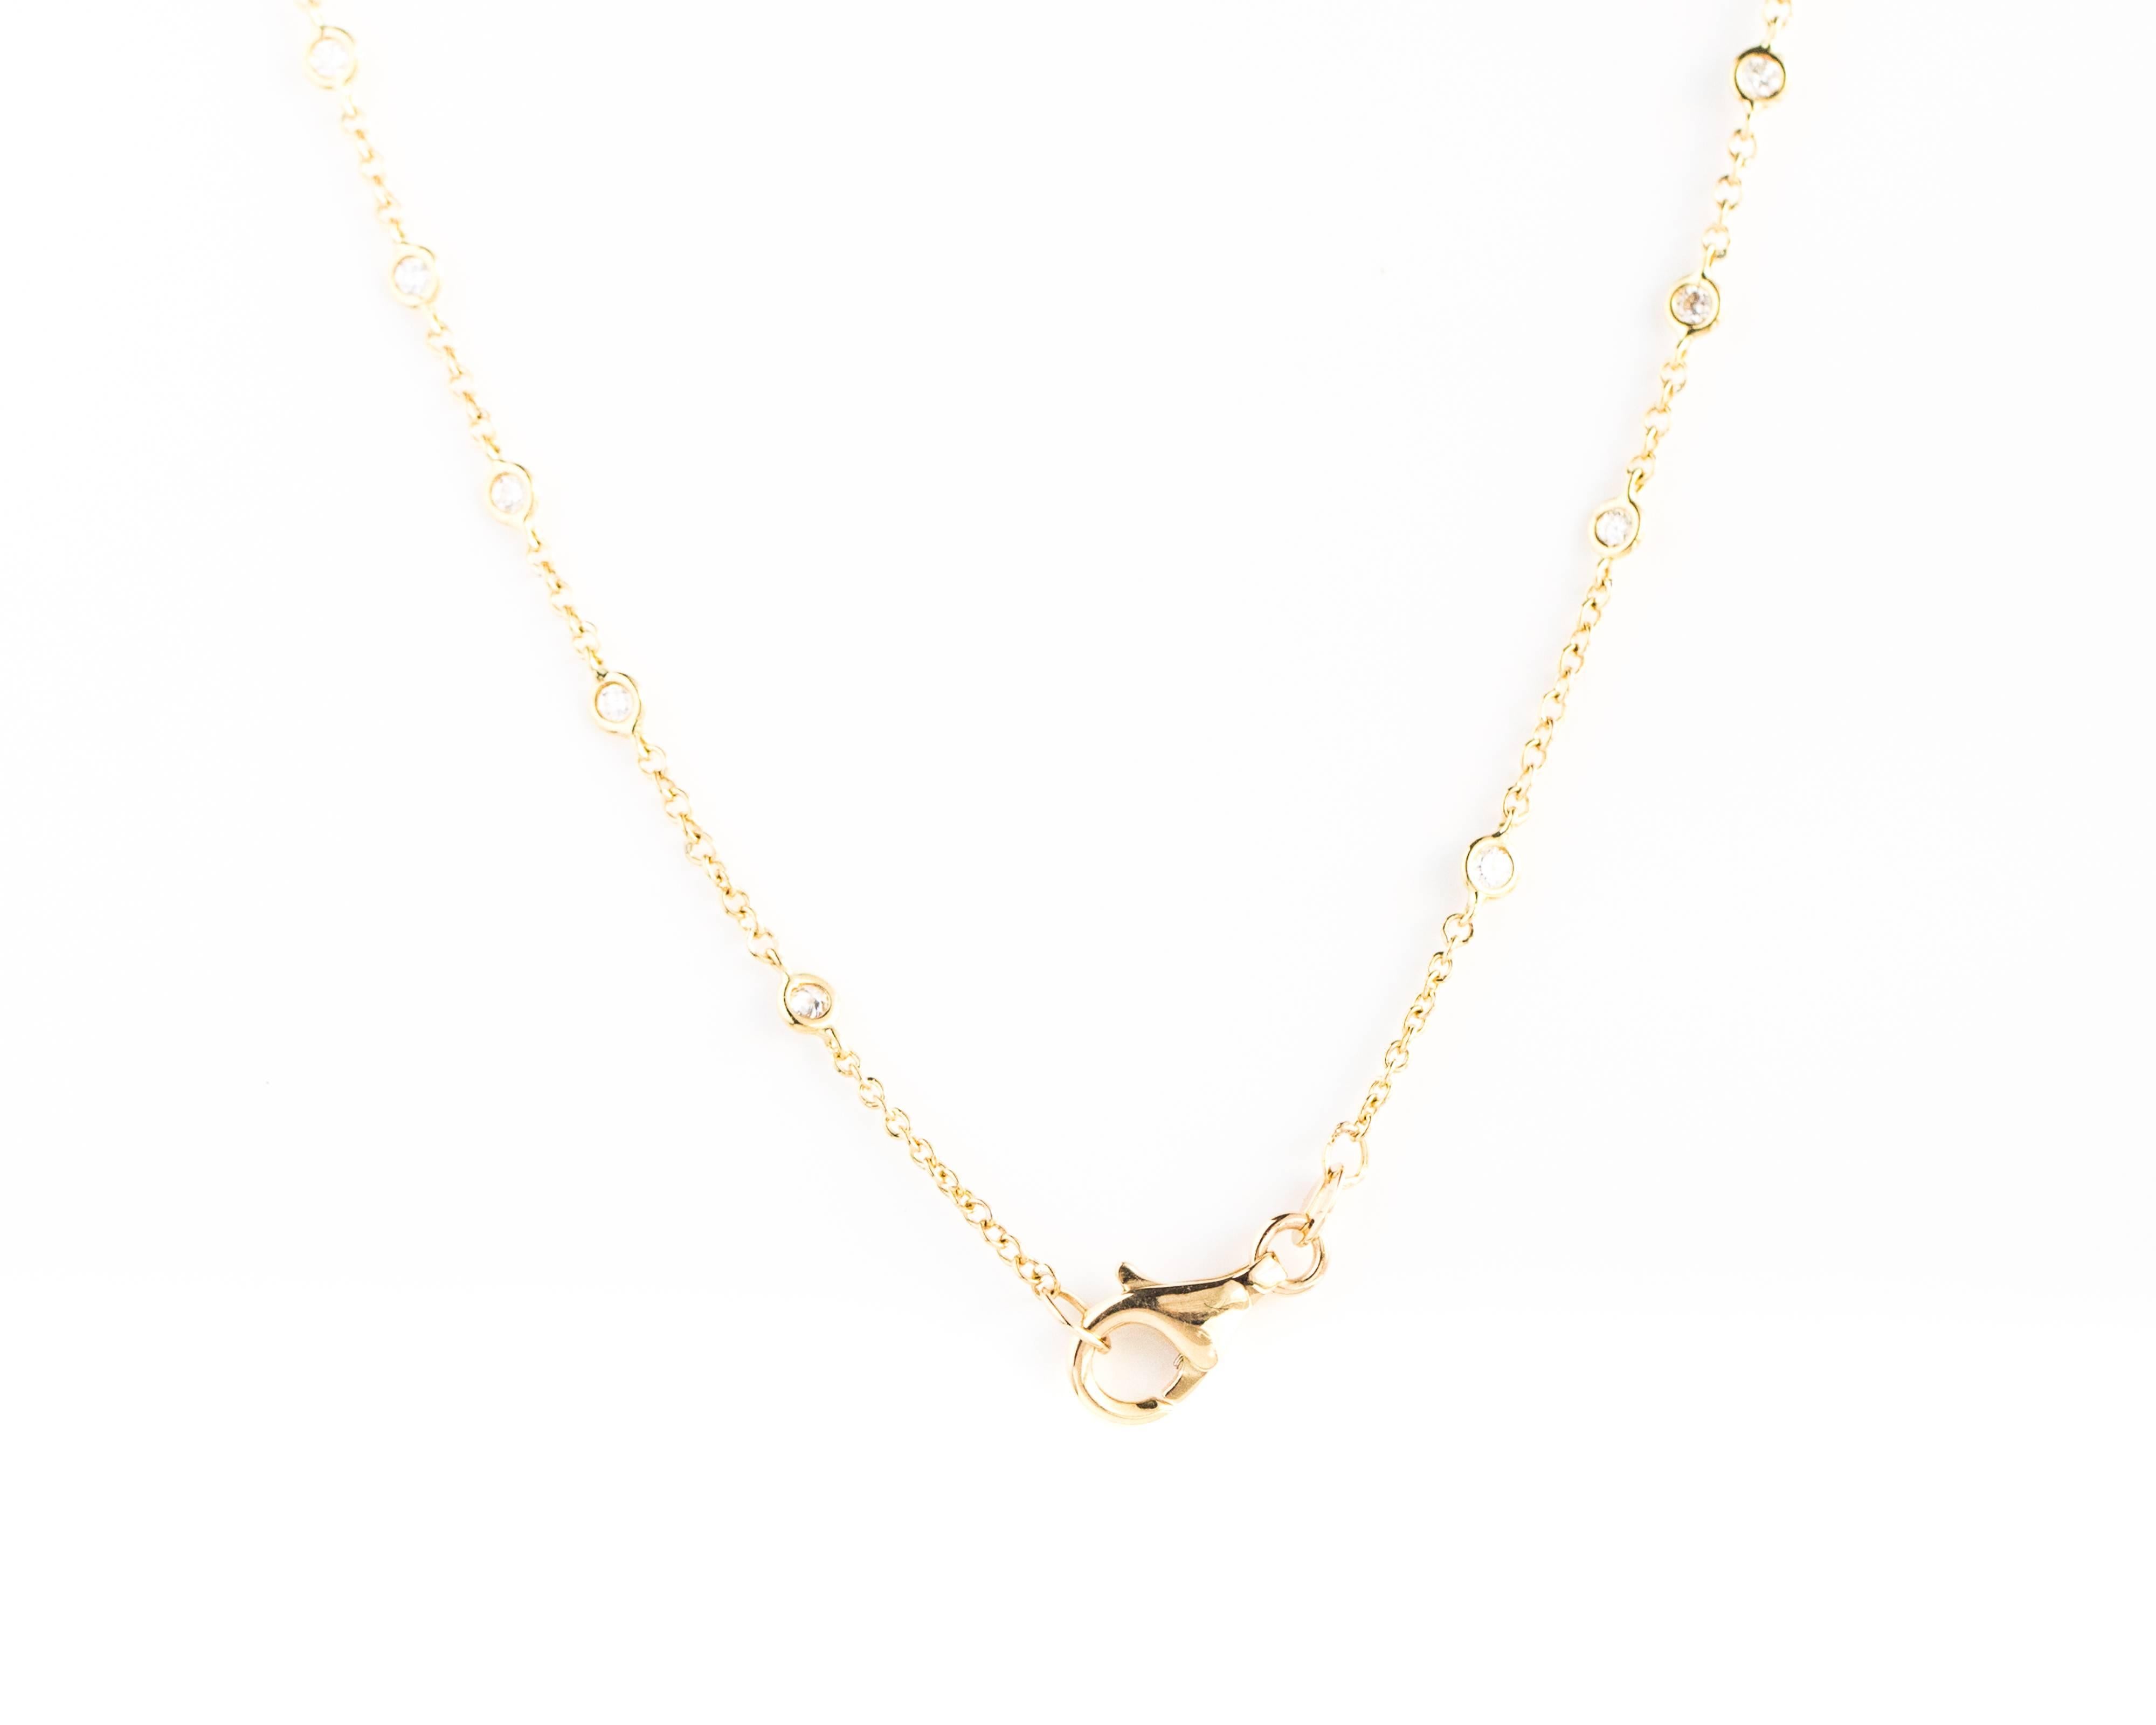 2 Carat Bezel Set Diamond Link Necklace in 14 Karat Yellow Gold 1